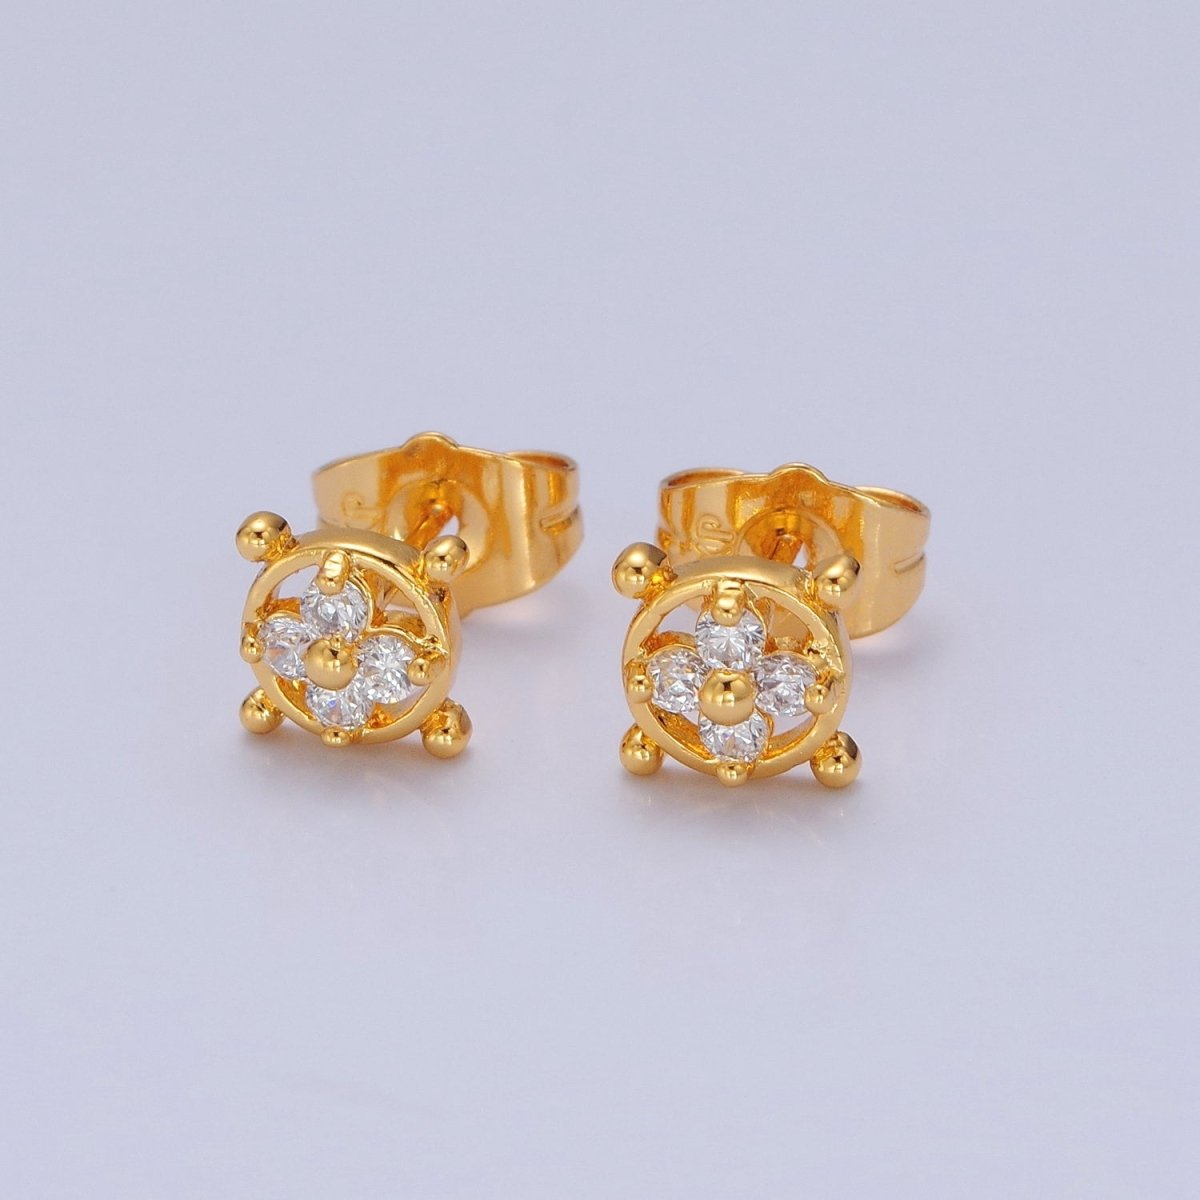 7mm Clover flower earrings Gold plated earrings stud T-545 - DLUXCA